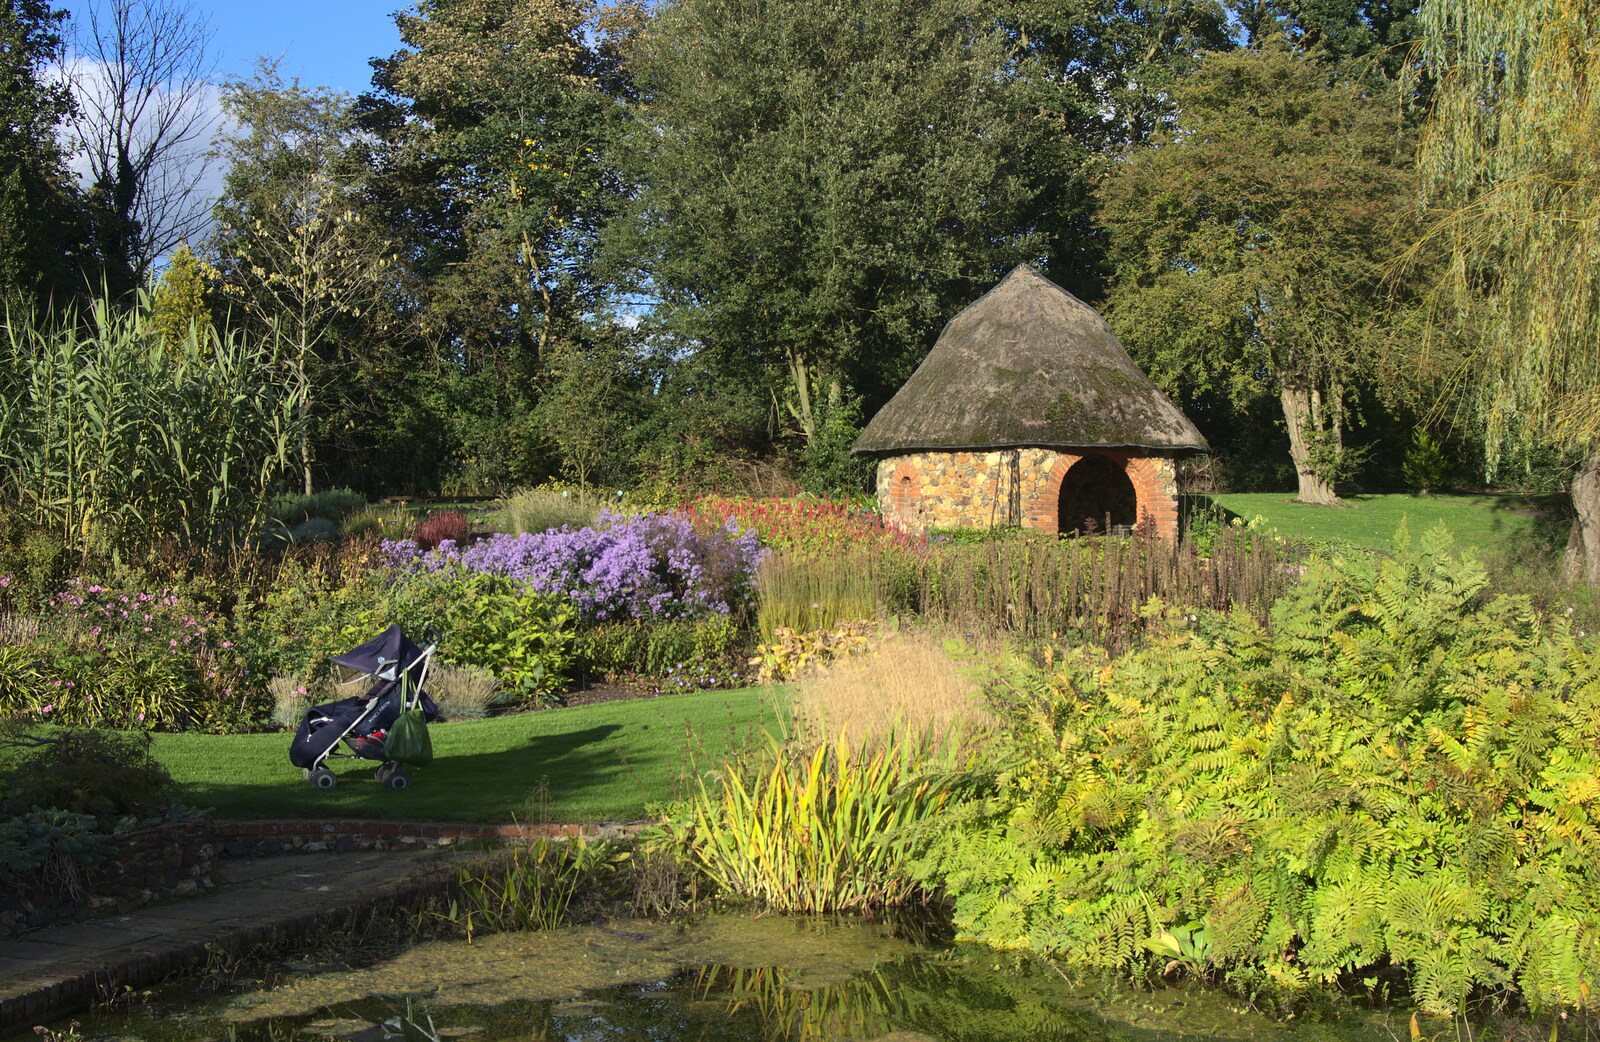 A small round hut from Alan Bloom's Gardens, Bressingham, Norfolk - 6th October 2012